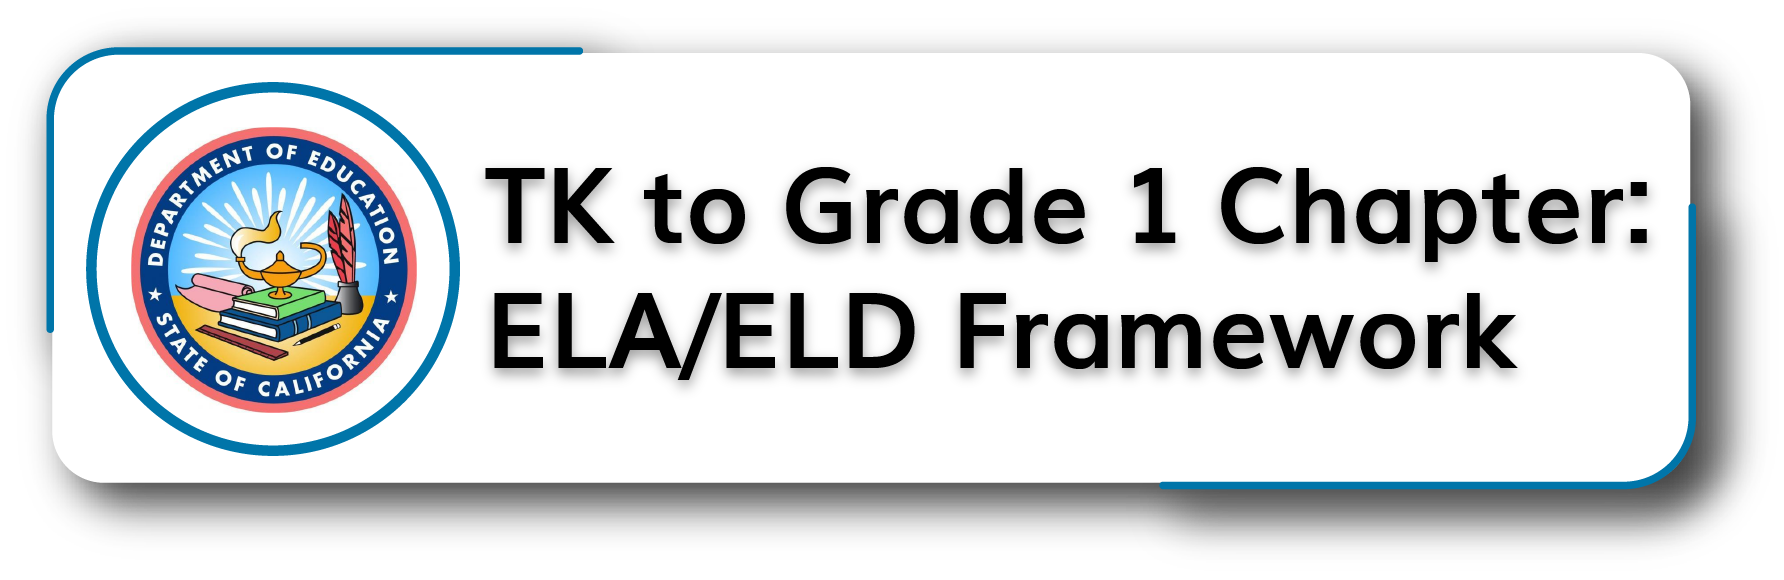 TK to Grade 1 Chapter: ELA/ELD Framework (CDE) Button